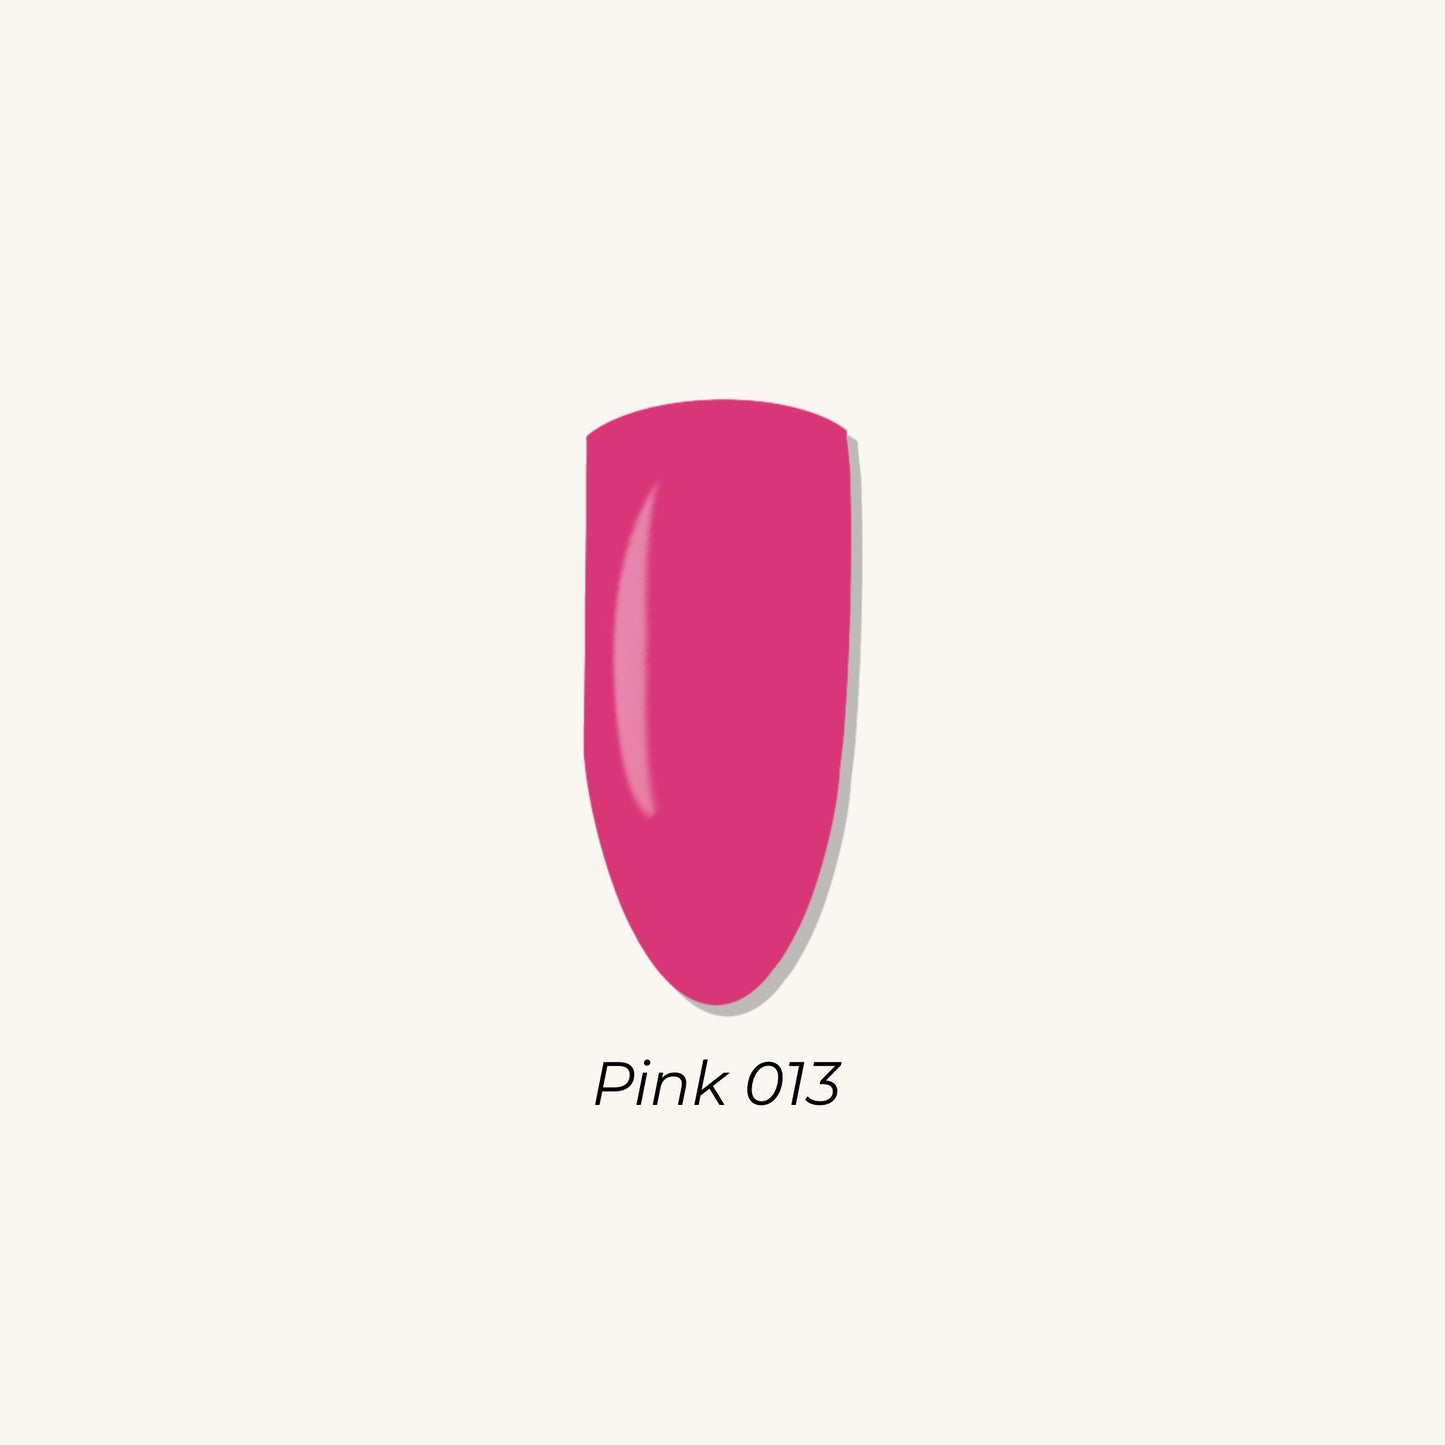 Pink 013